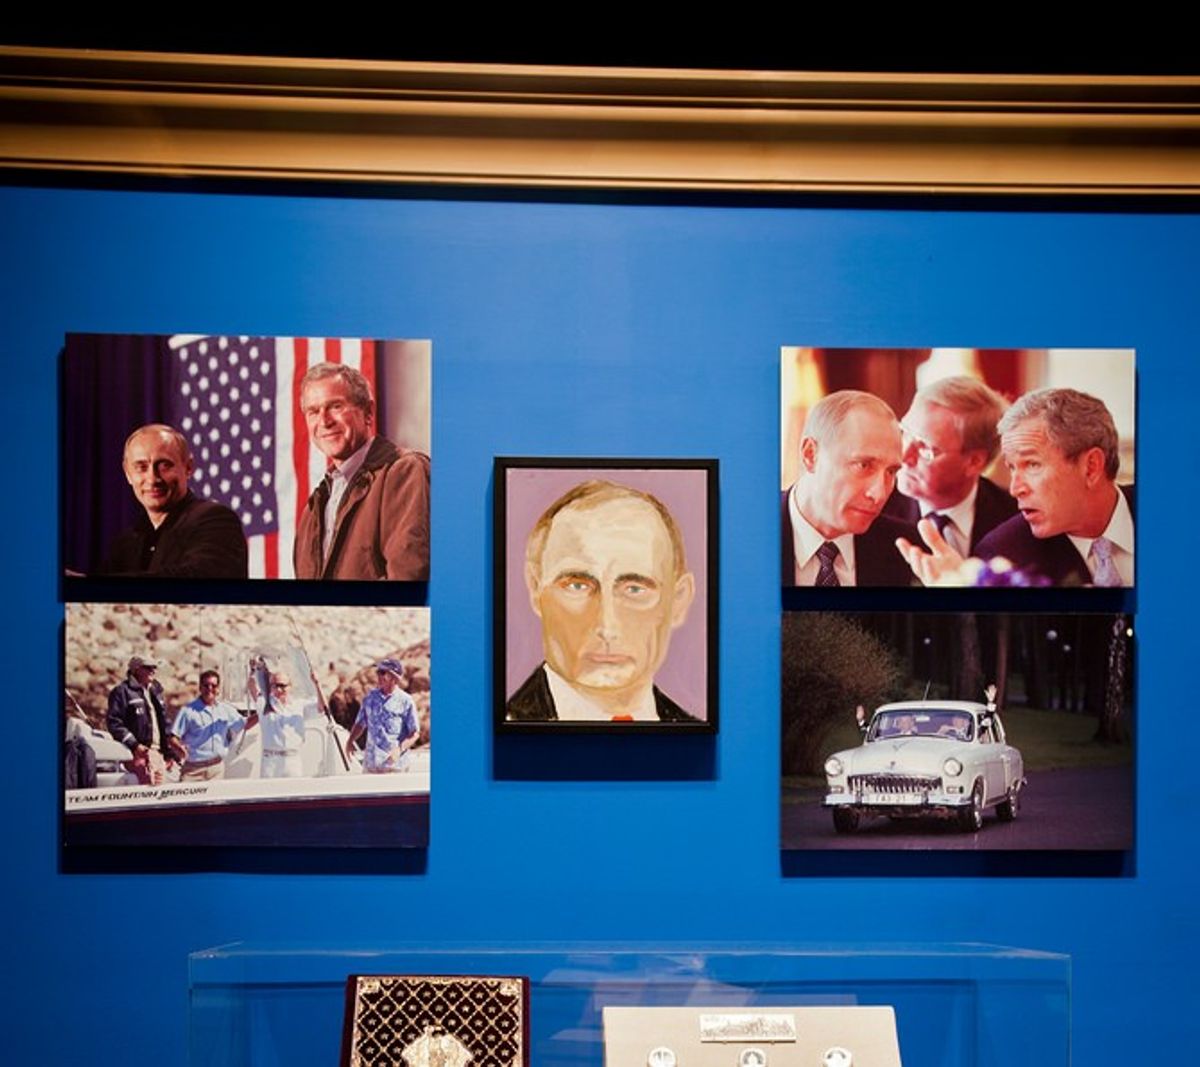      (Kim Leeson/George W. Bush Presidential Center via Flickr)